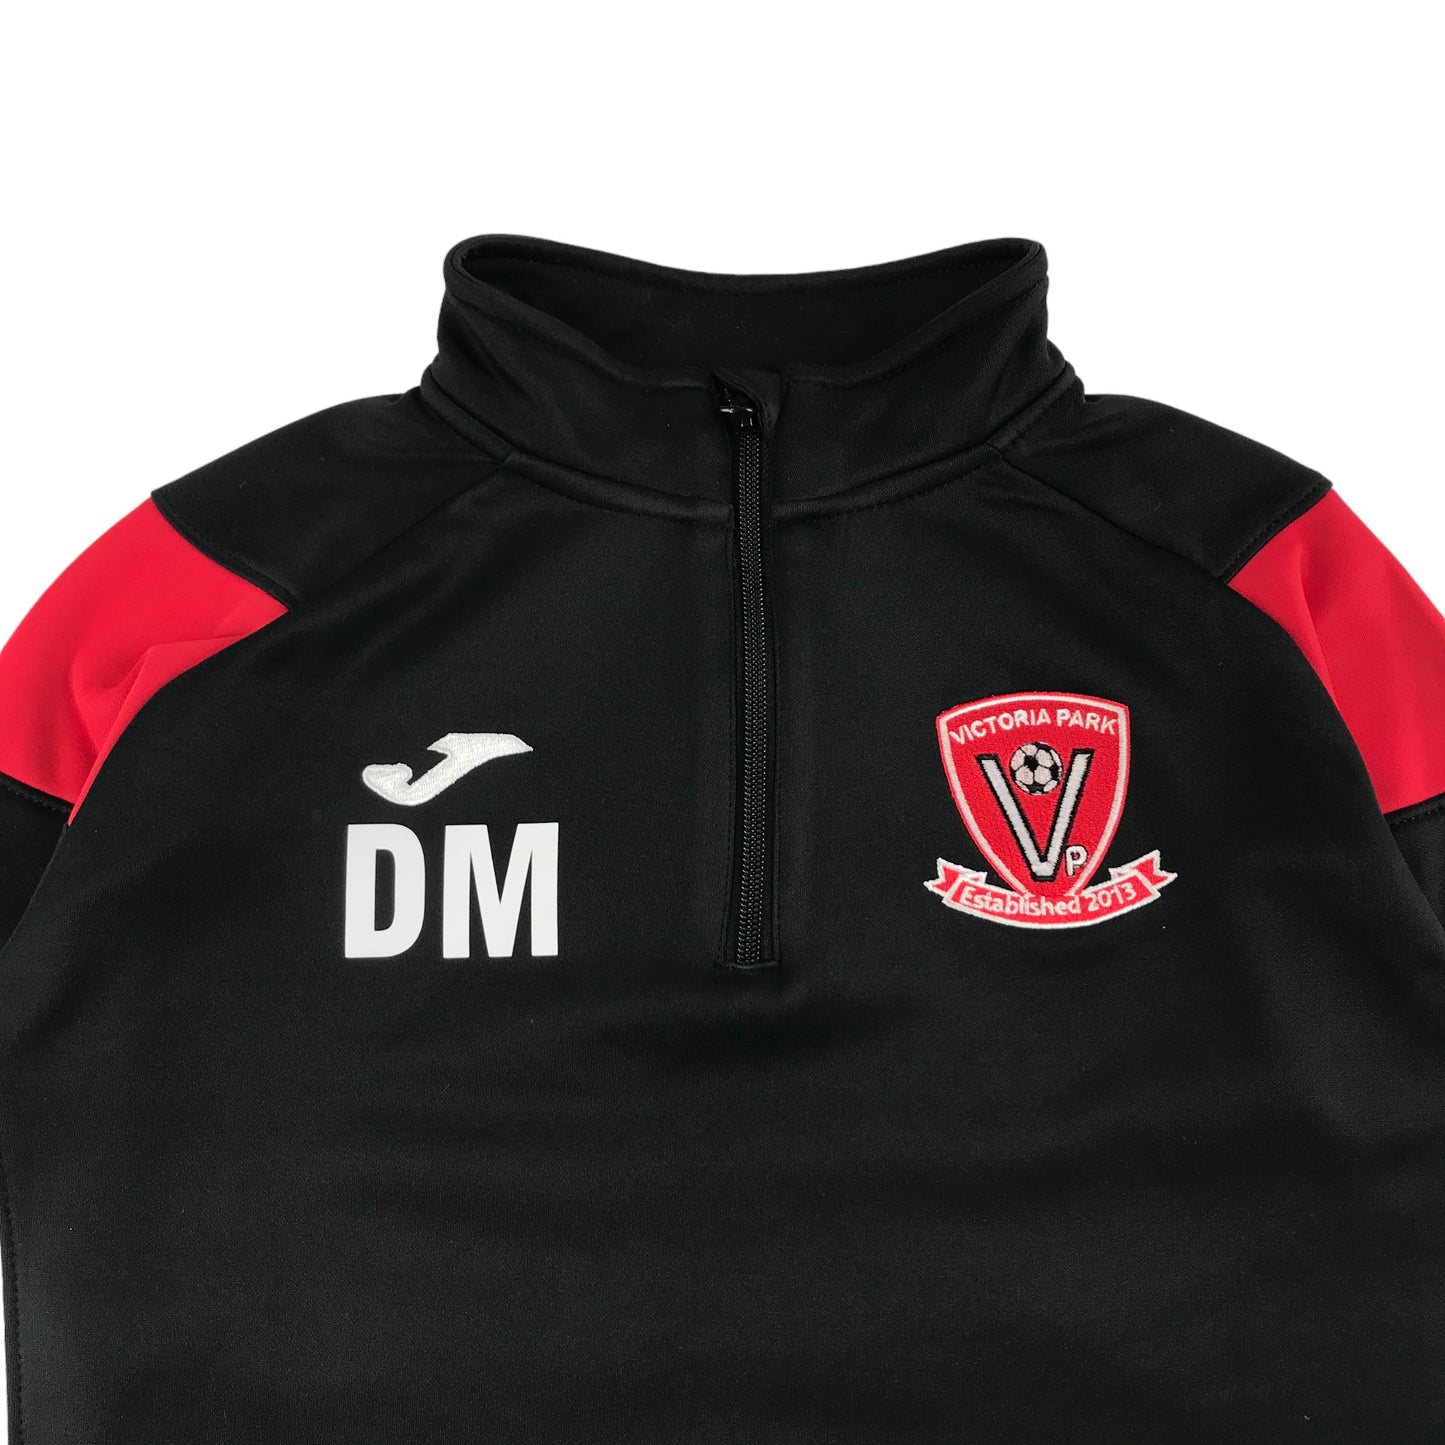 Joma Victoria Park FC Sweatshirt Age 11-12 Black and Red Half Zipper Sports Top